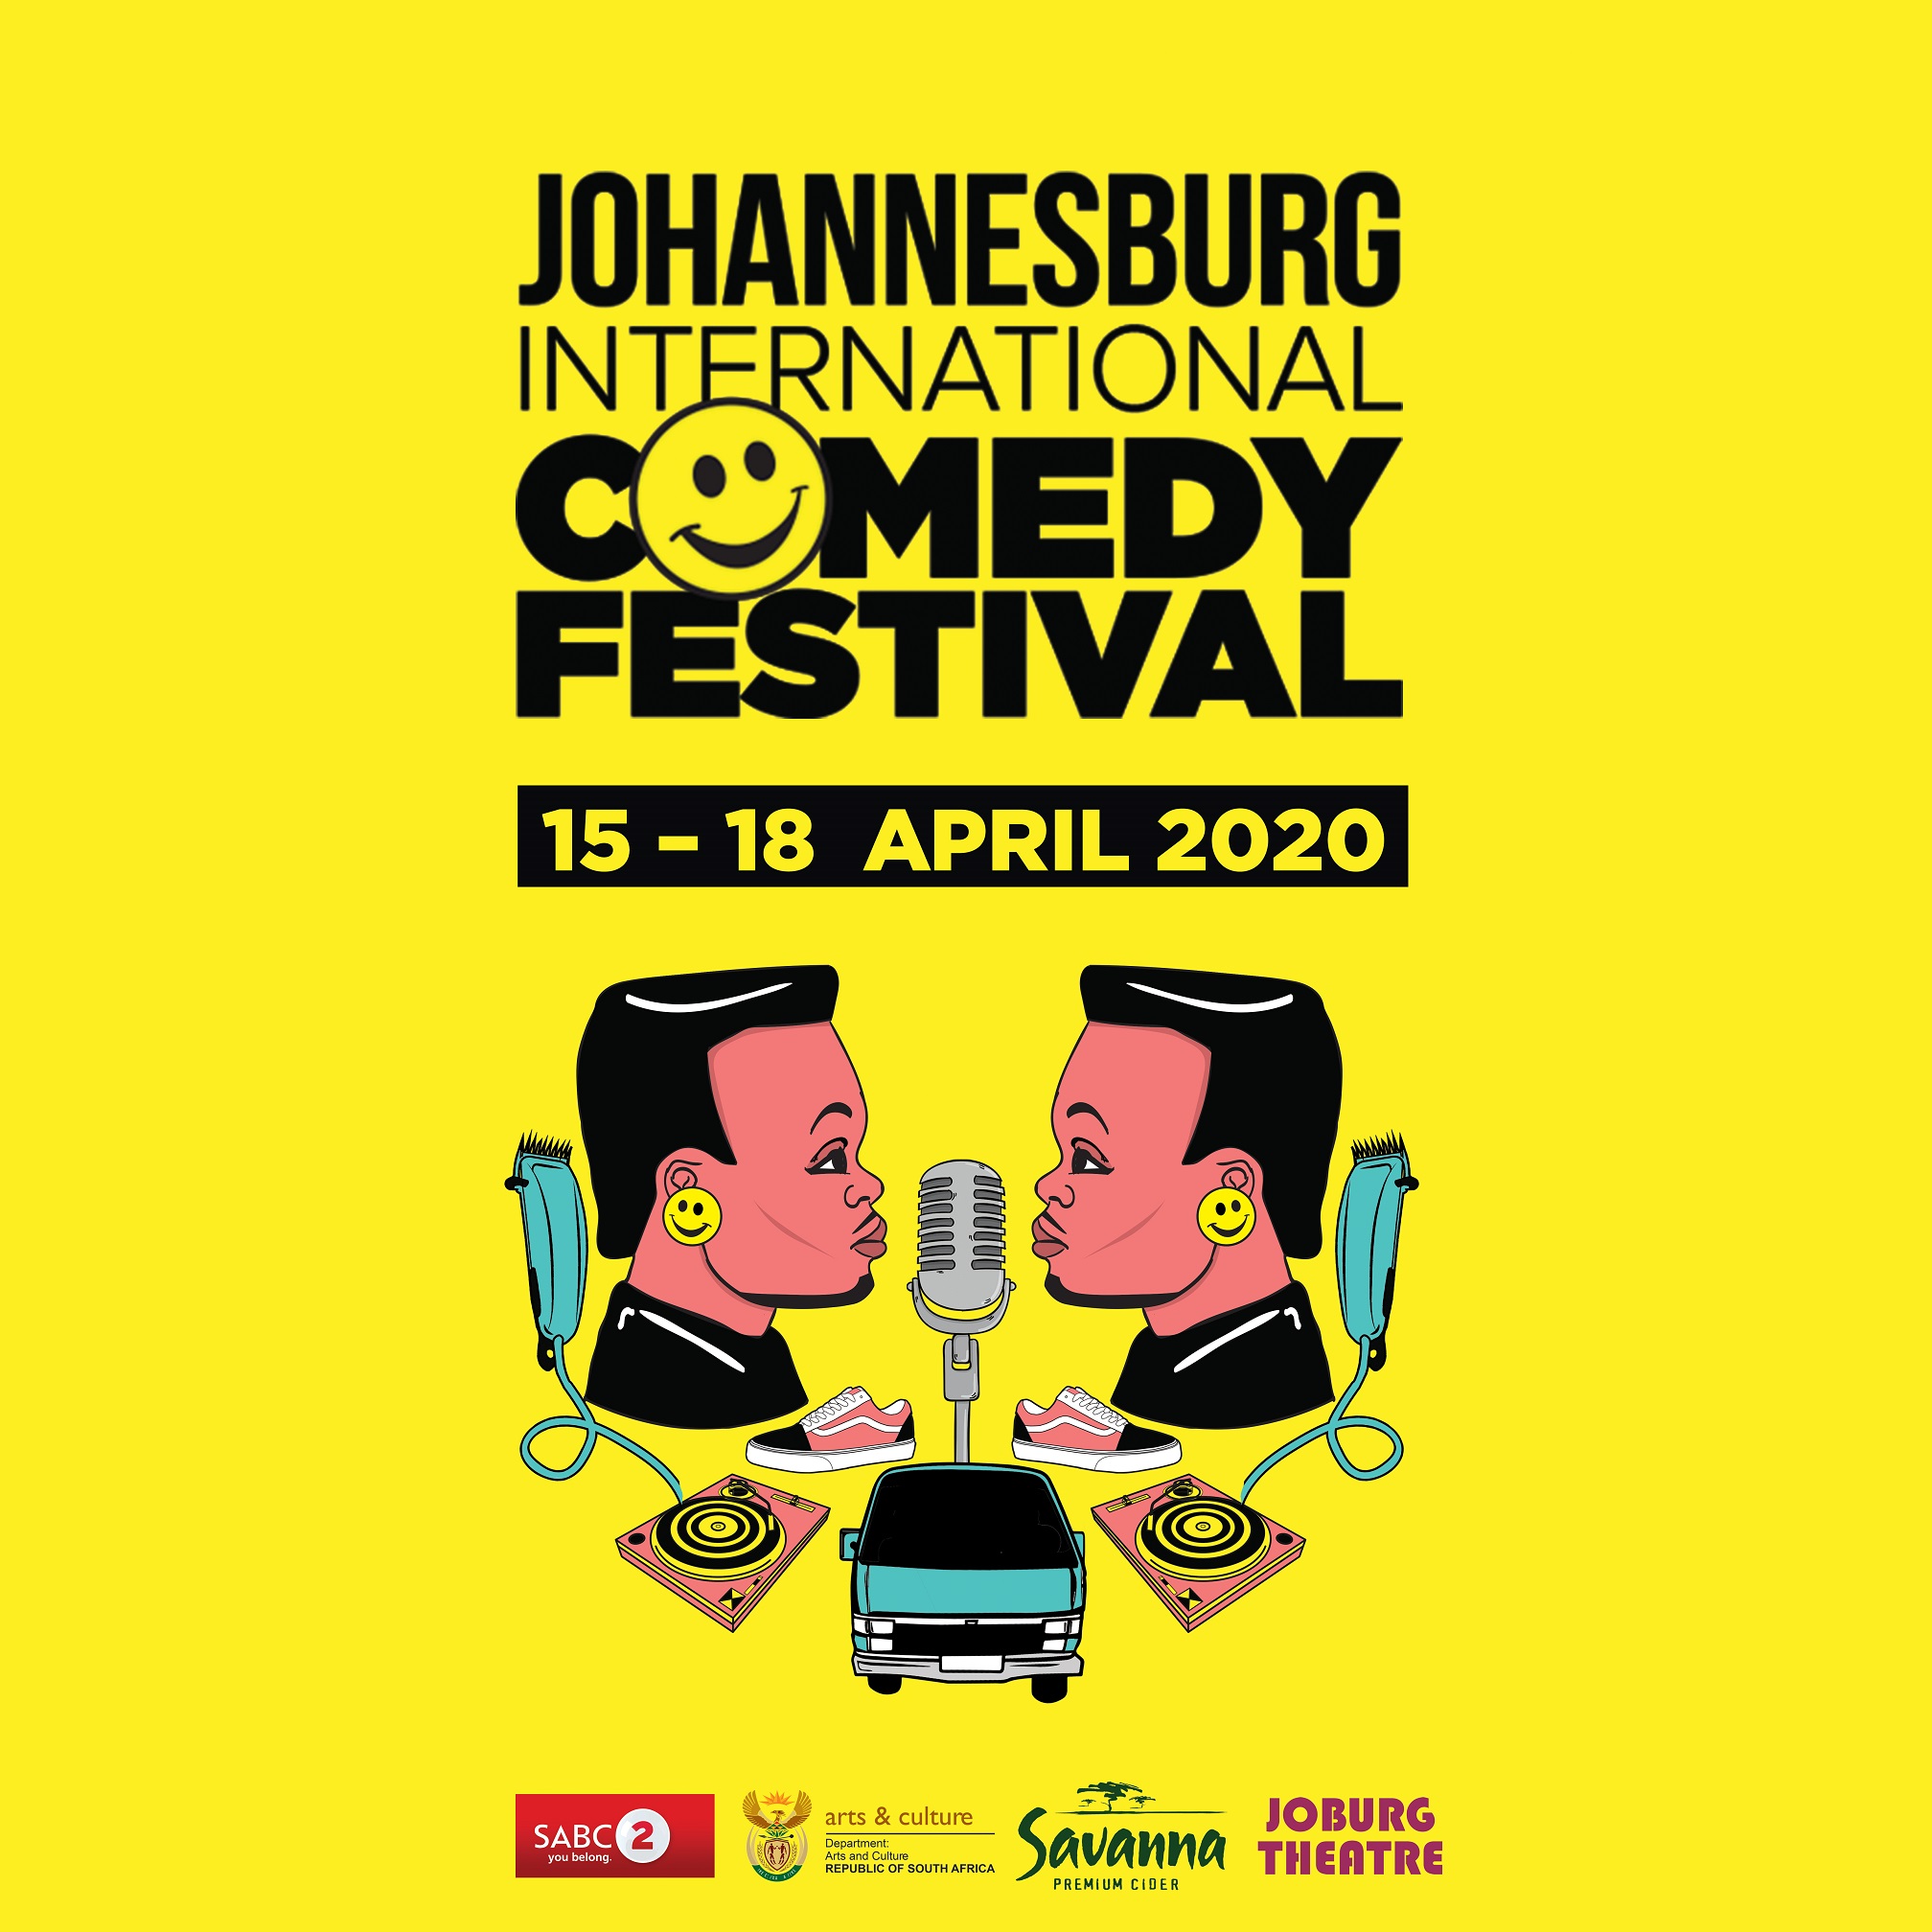 Johannesburg International Comedy Festival makes a Return